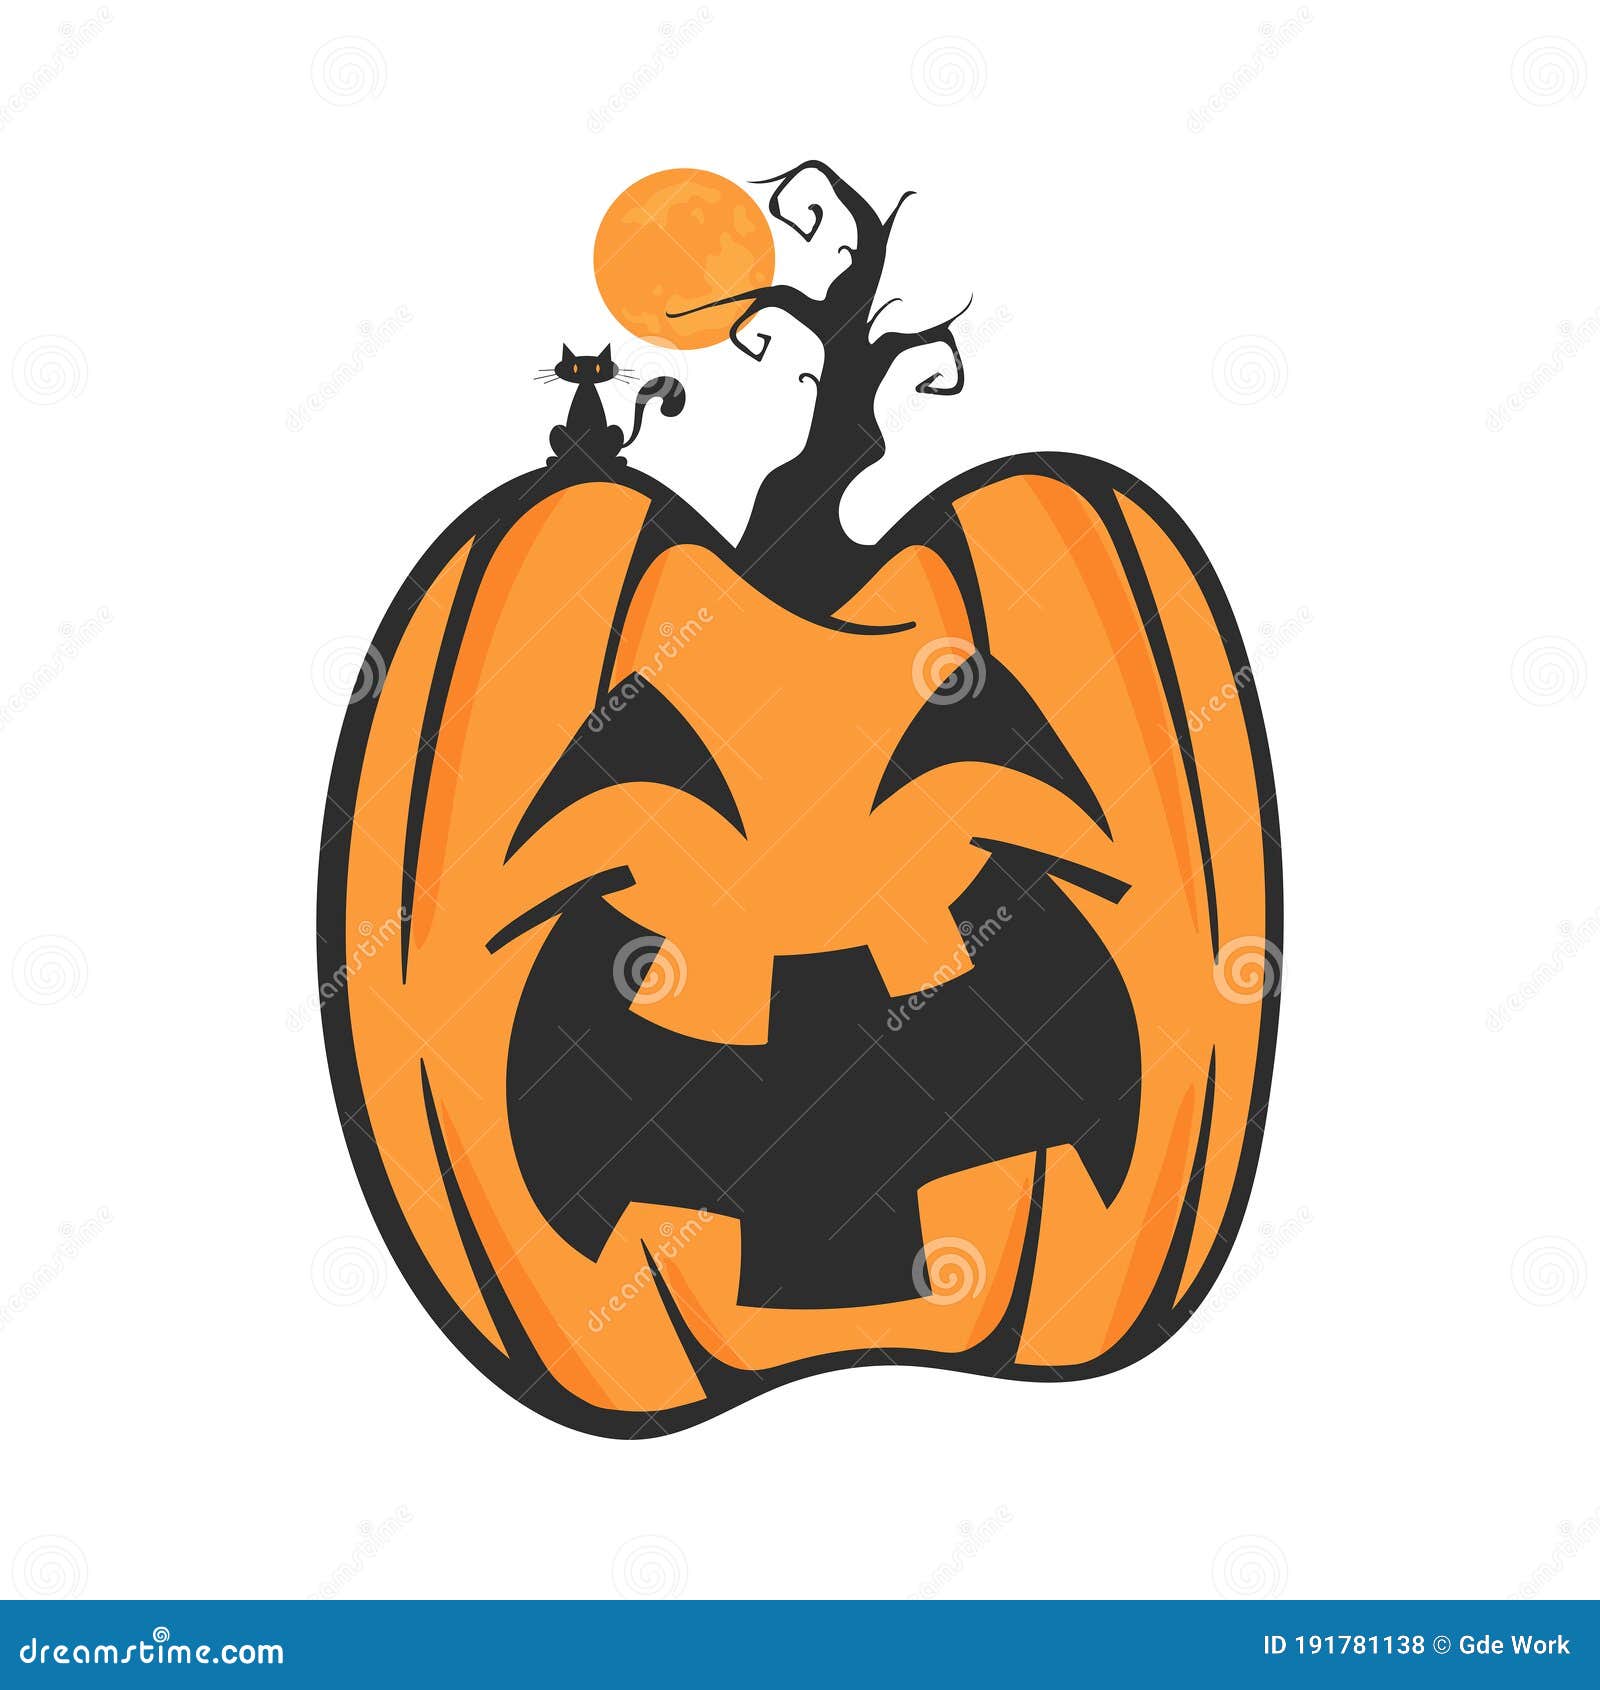 The Mountain Halloween Fairy Child Size Small Jack-O-Lantern Pumpkin T-Shirt